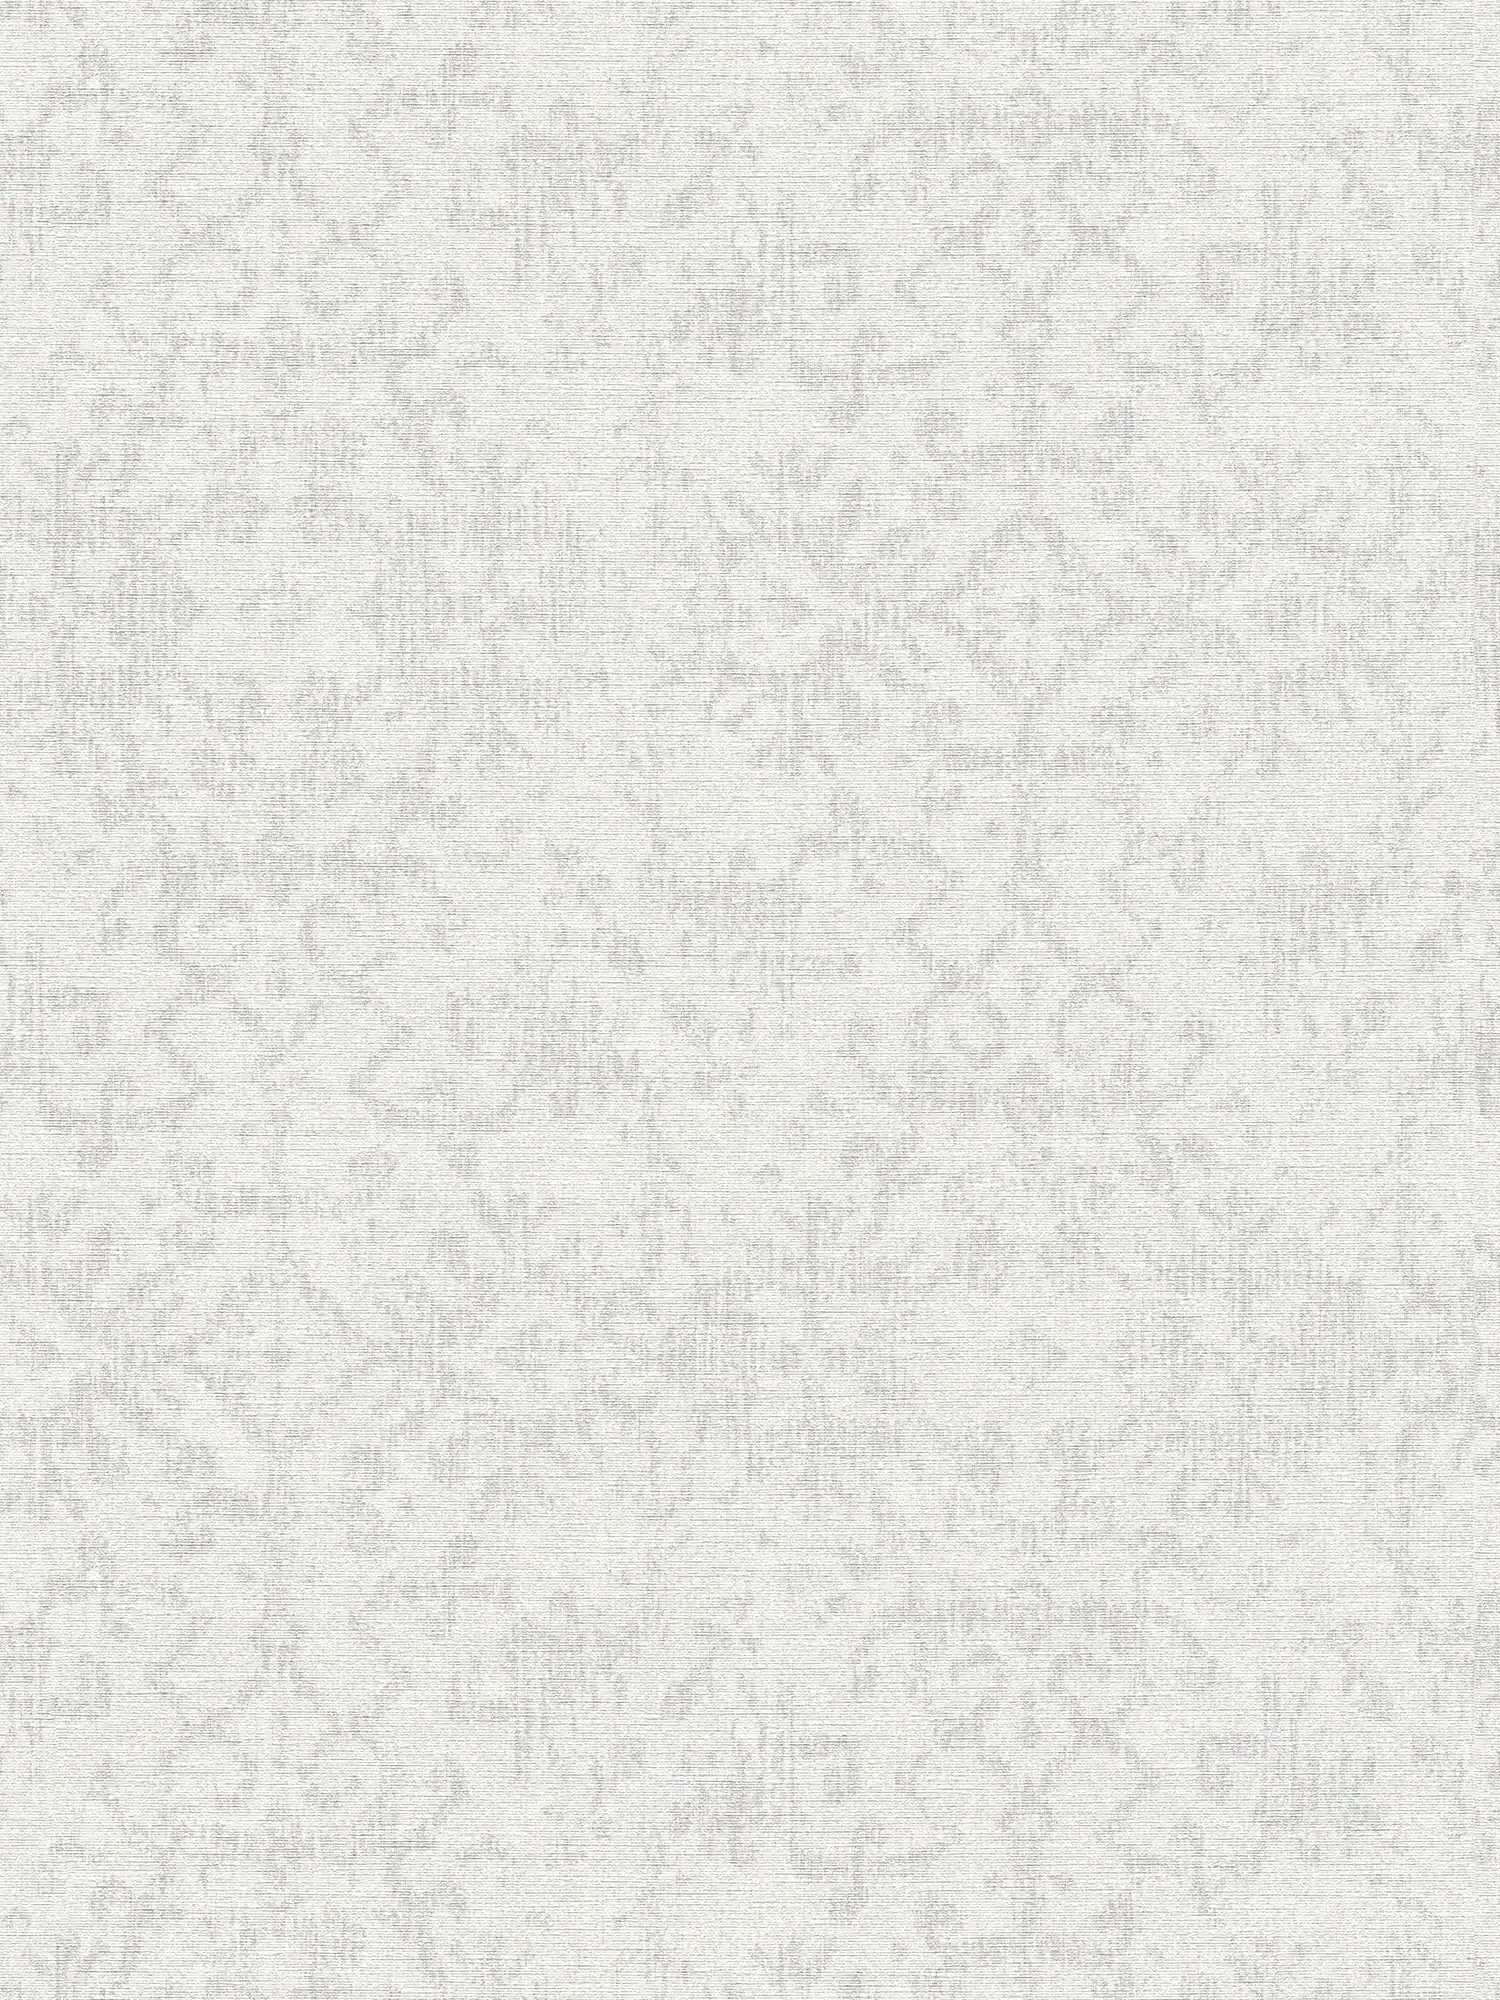 Ethno Tapete Grau mit Textiloptik Ornament Design
